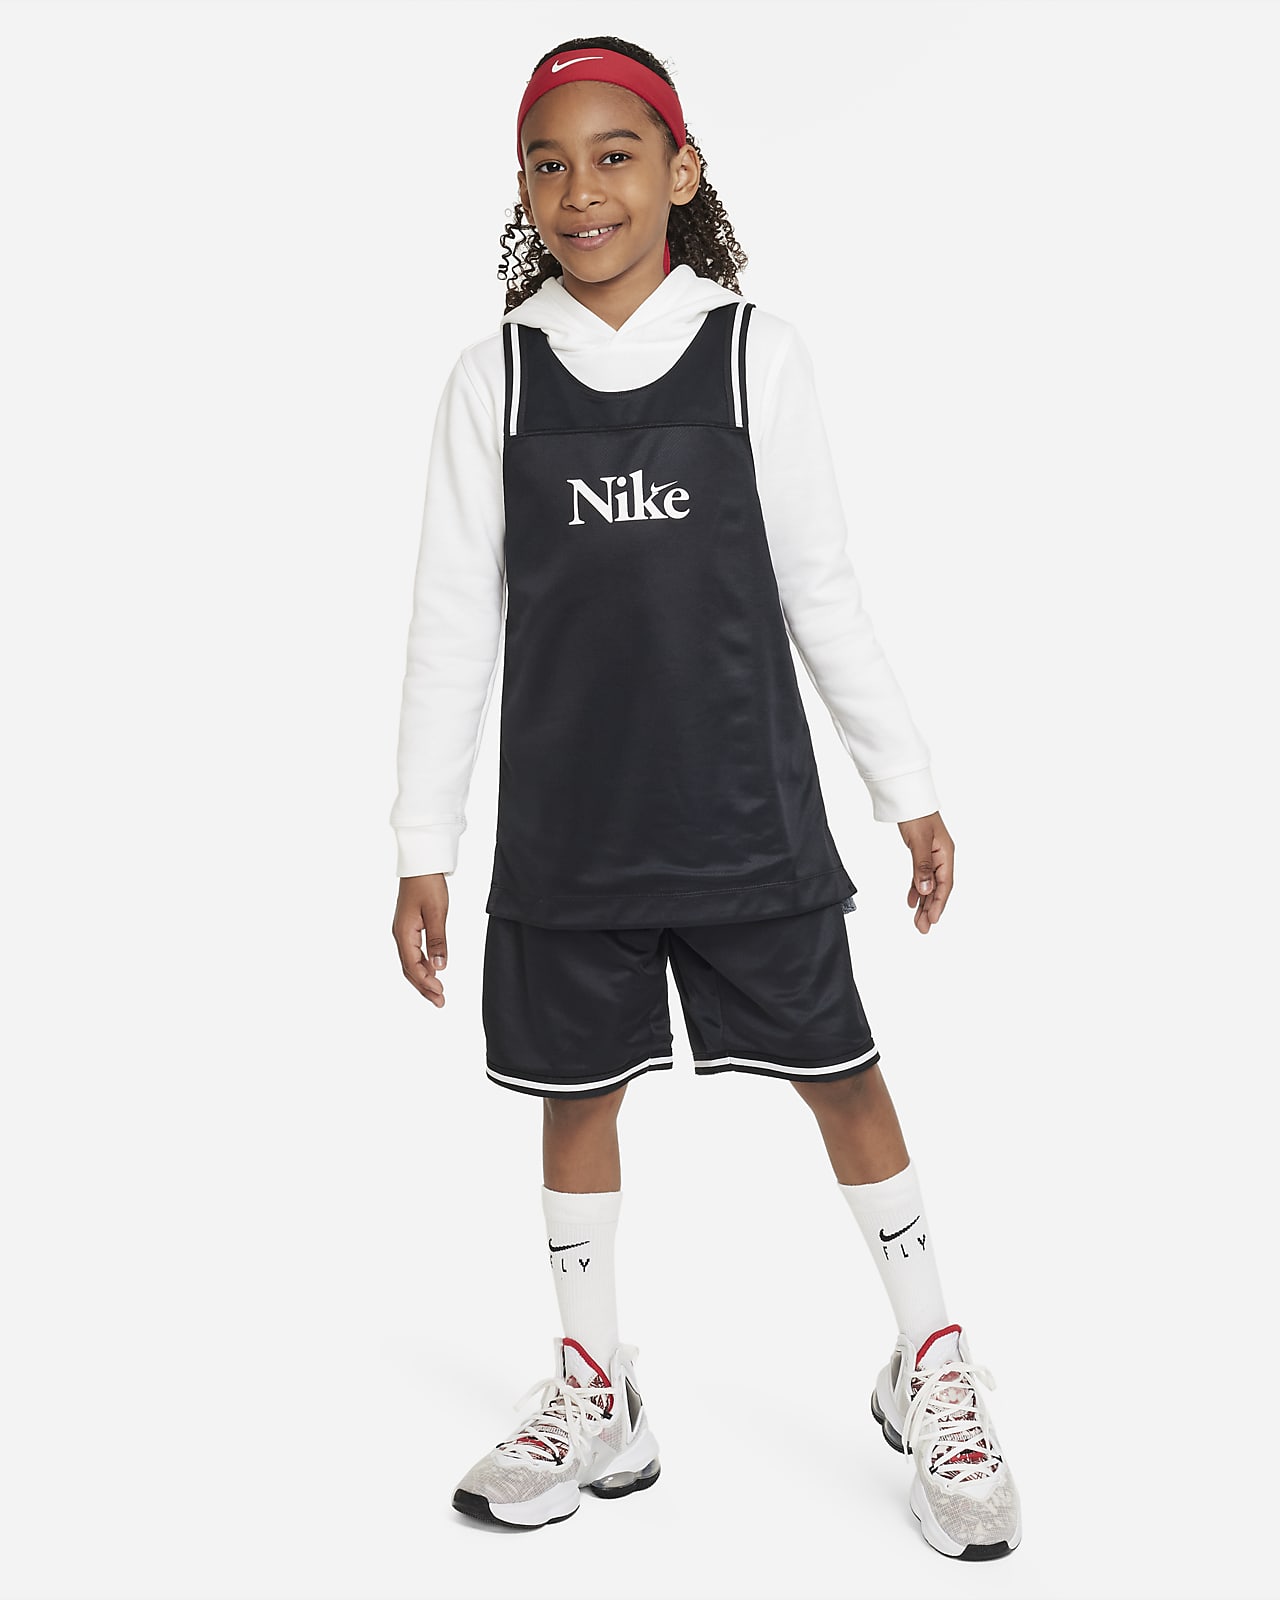 Nike Culture of Basketball Older Kids' (Boys') Fleece Basketball